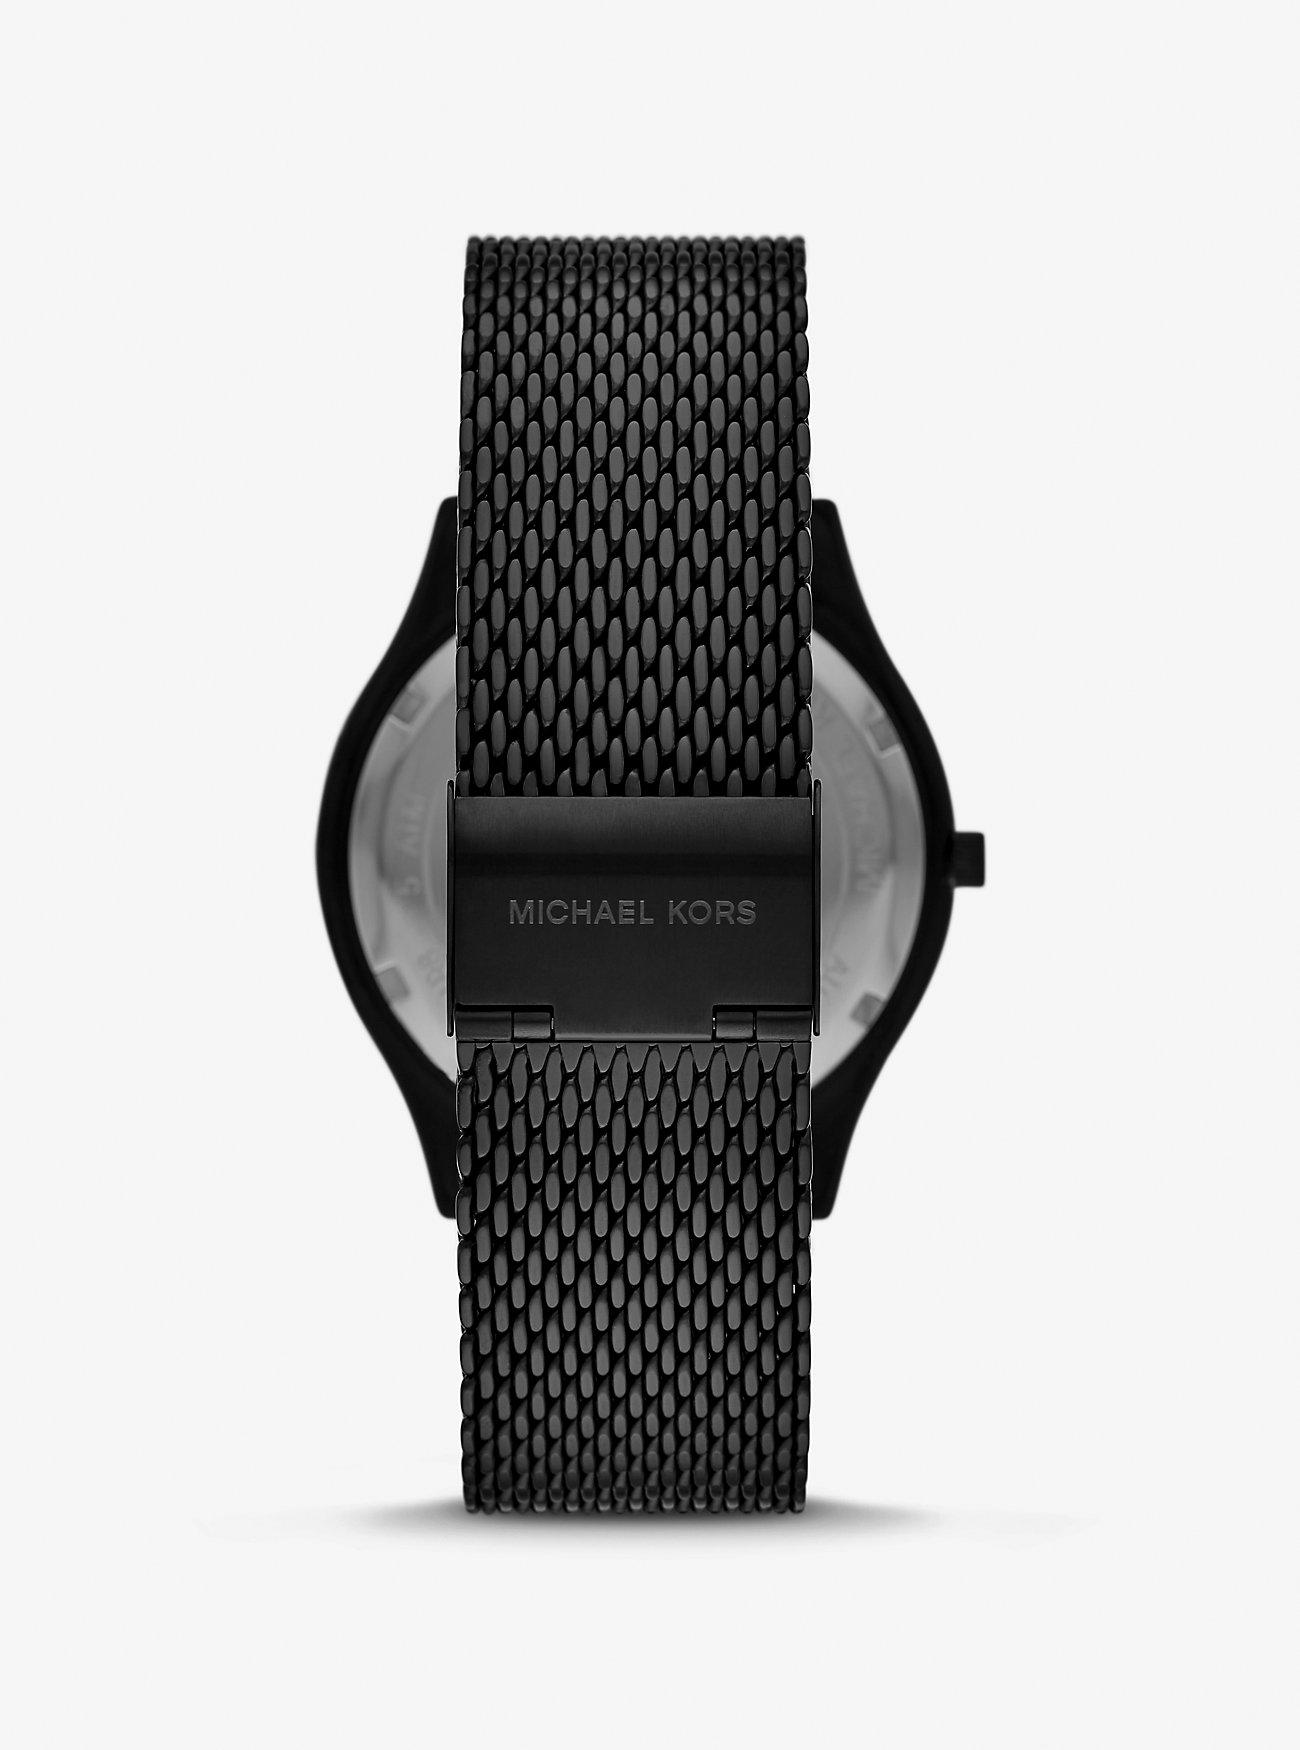 Đồng Hồ Michael Kors Oversized Slim Runway Black-Tone Watch And Card Case Gift Set Nữ Đen